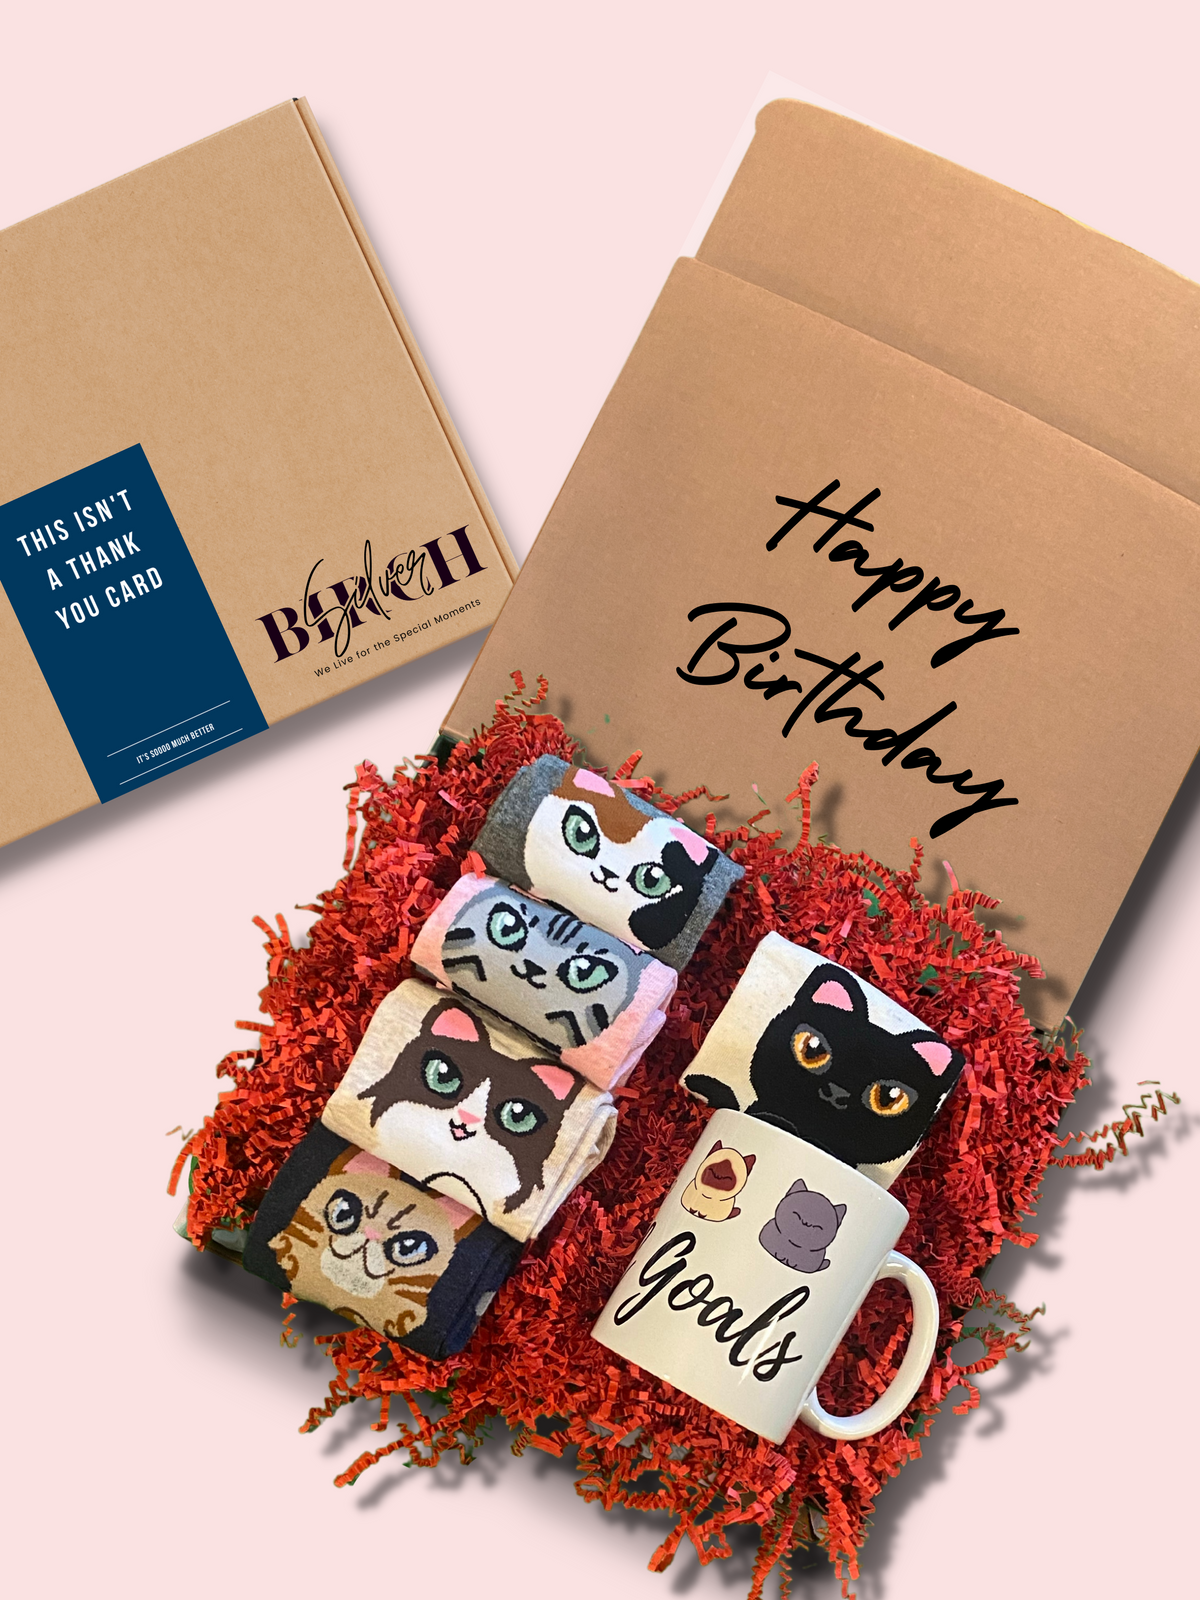 Cat Lovers Gift Box | Mug & Socks